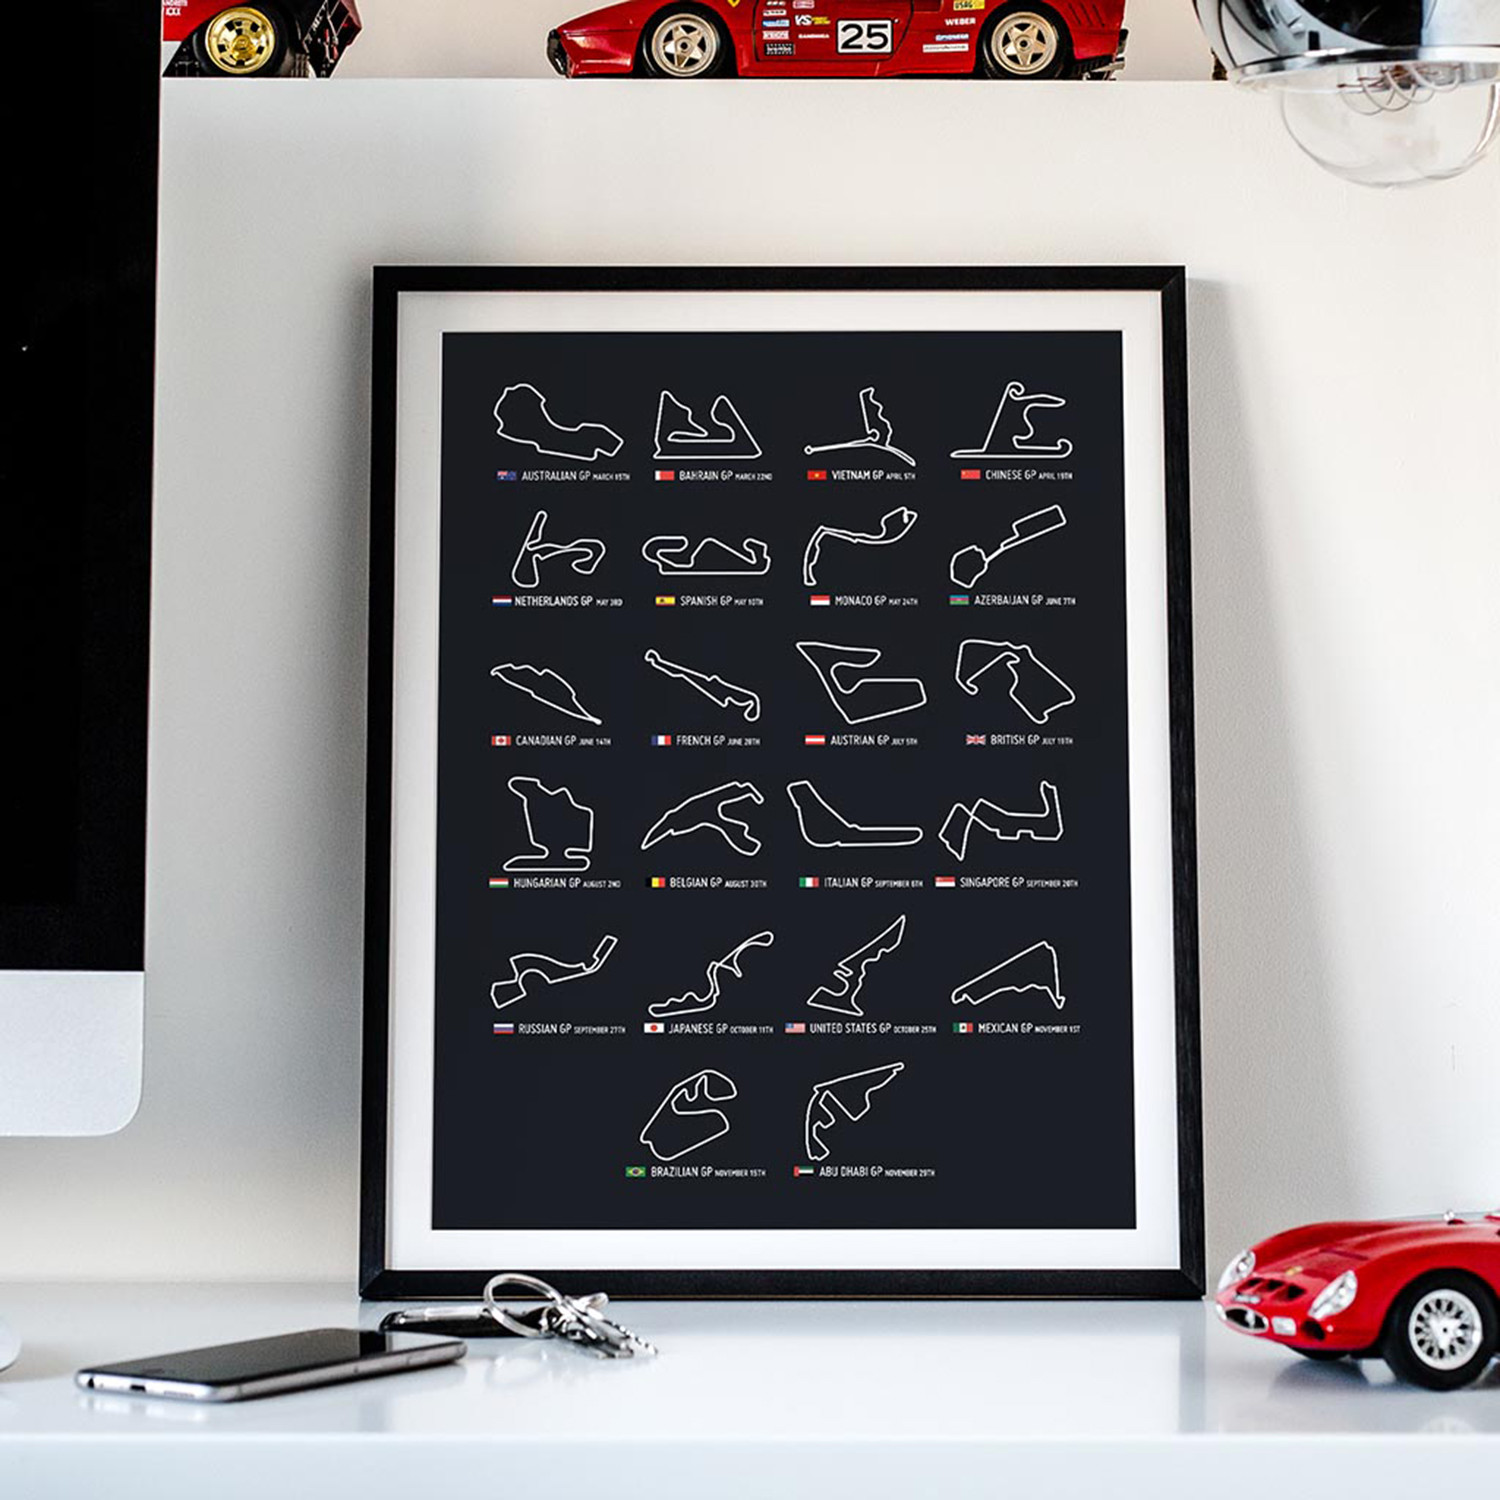 F1 Schedule // 2020 Calendar Rear View Prints Touch of Modern